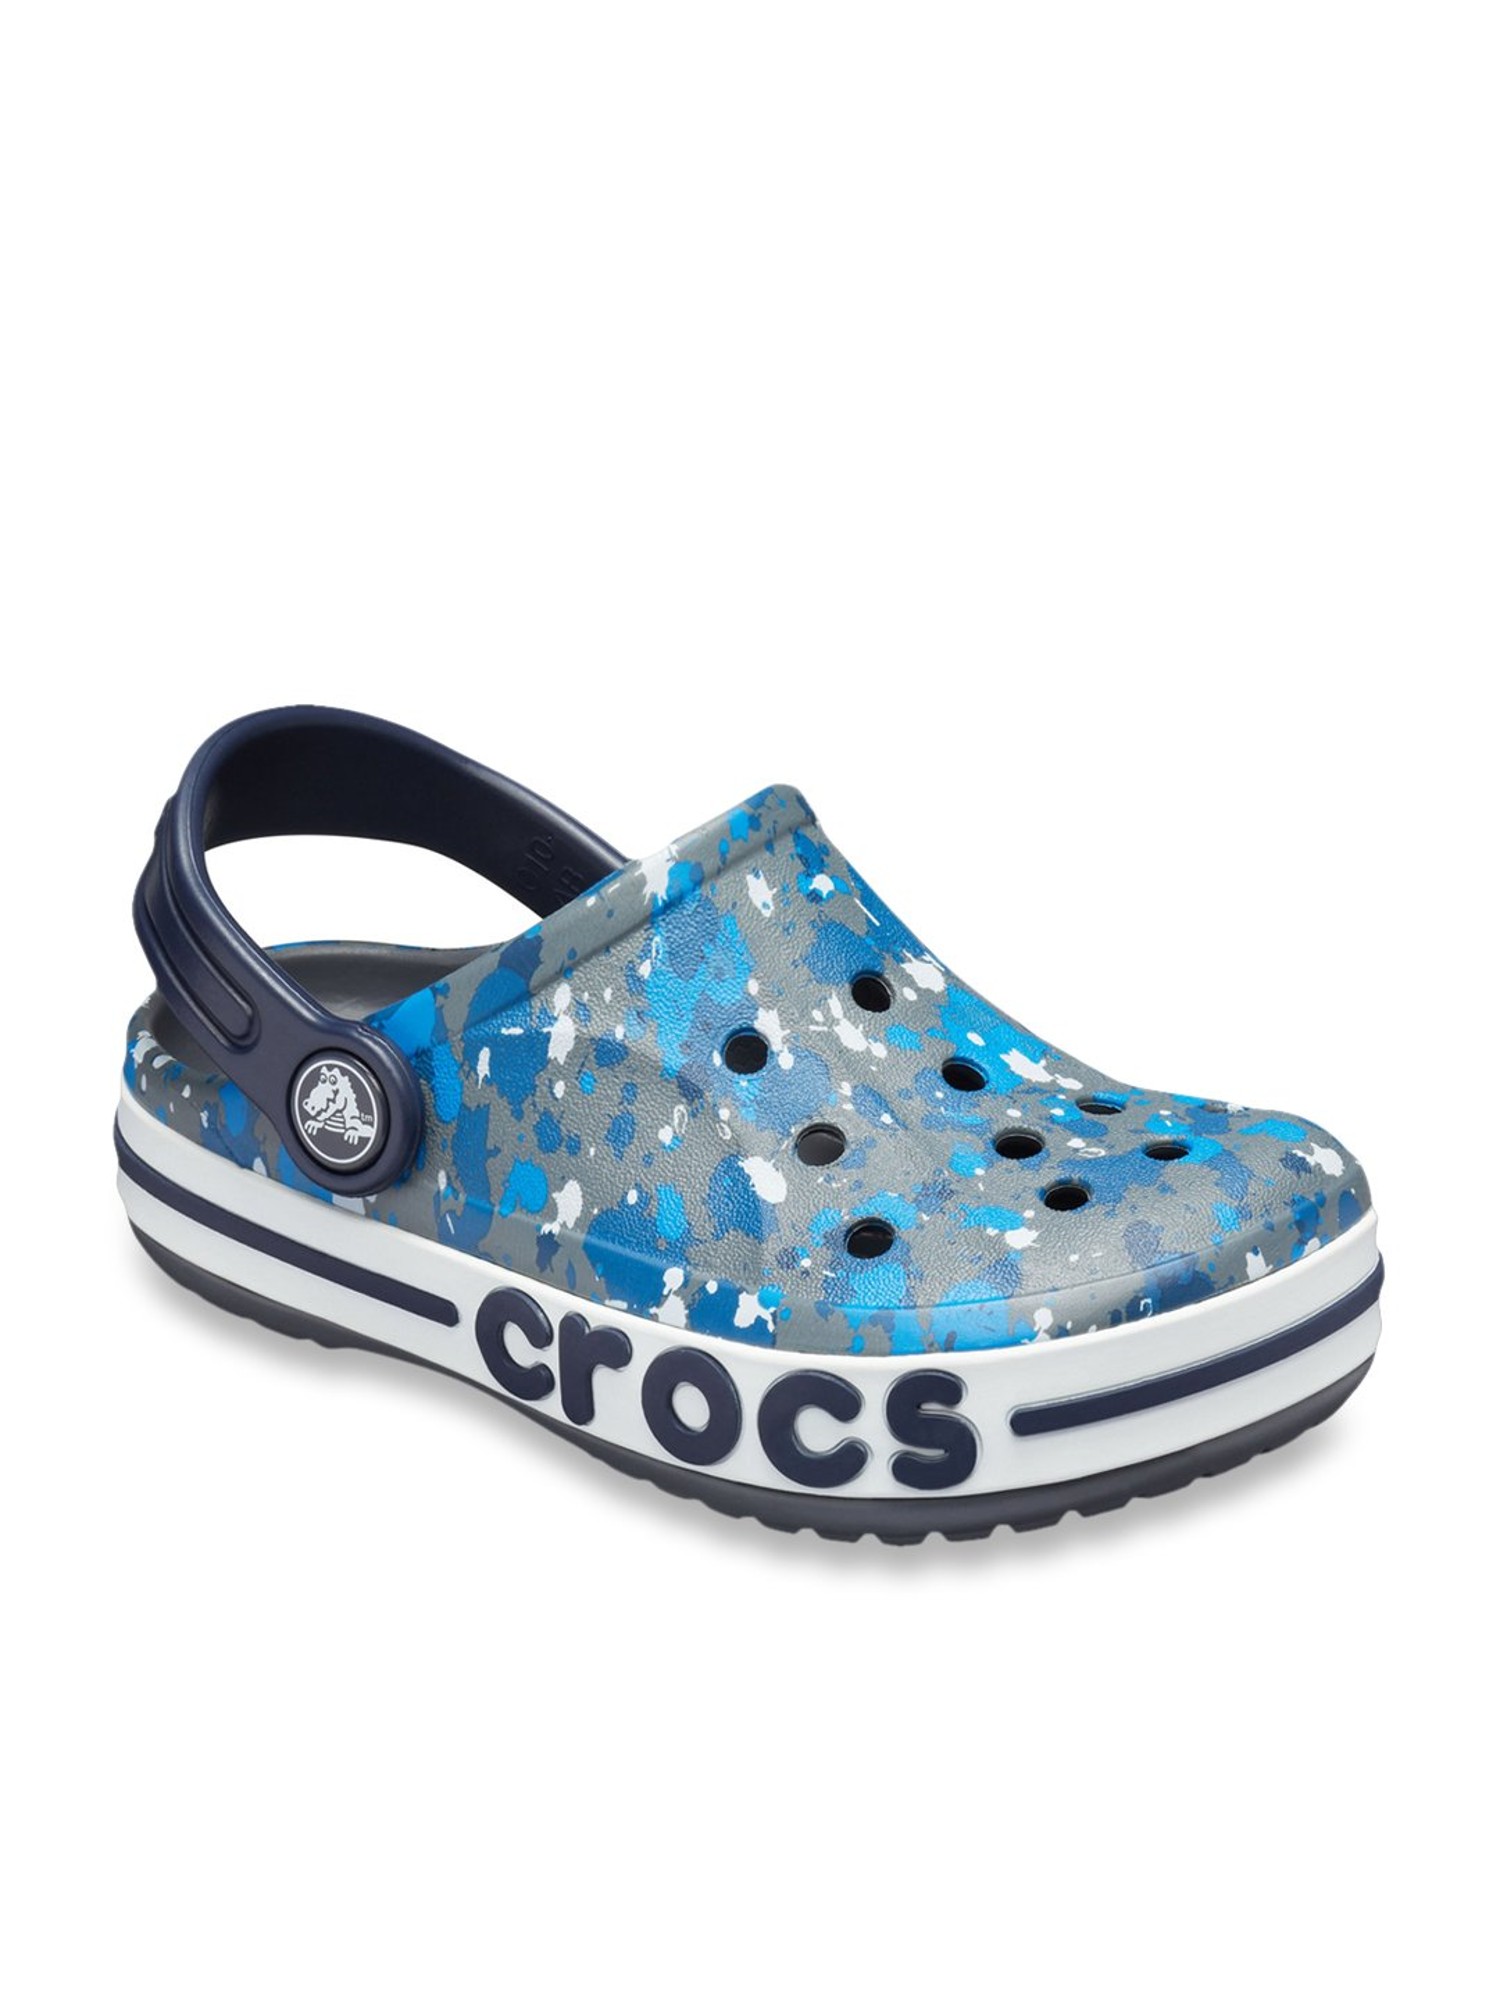 crocs grey and blue